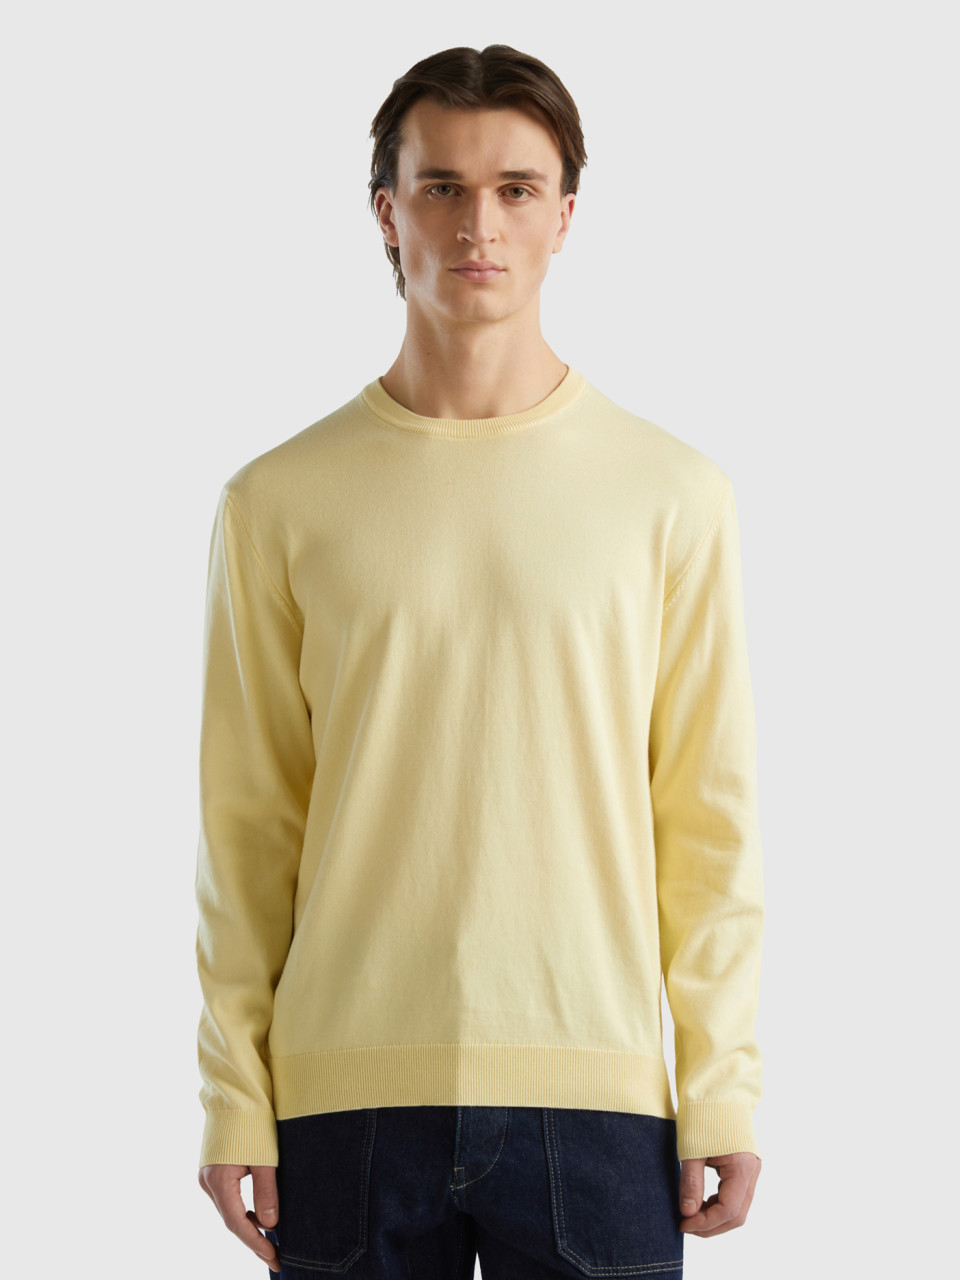 Benetton, Crew Neck Sweater In 100% Cotton, Yellow, Men